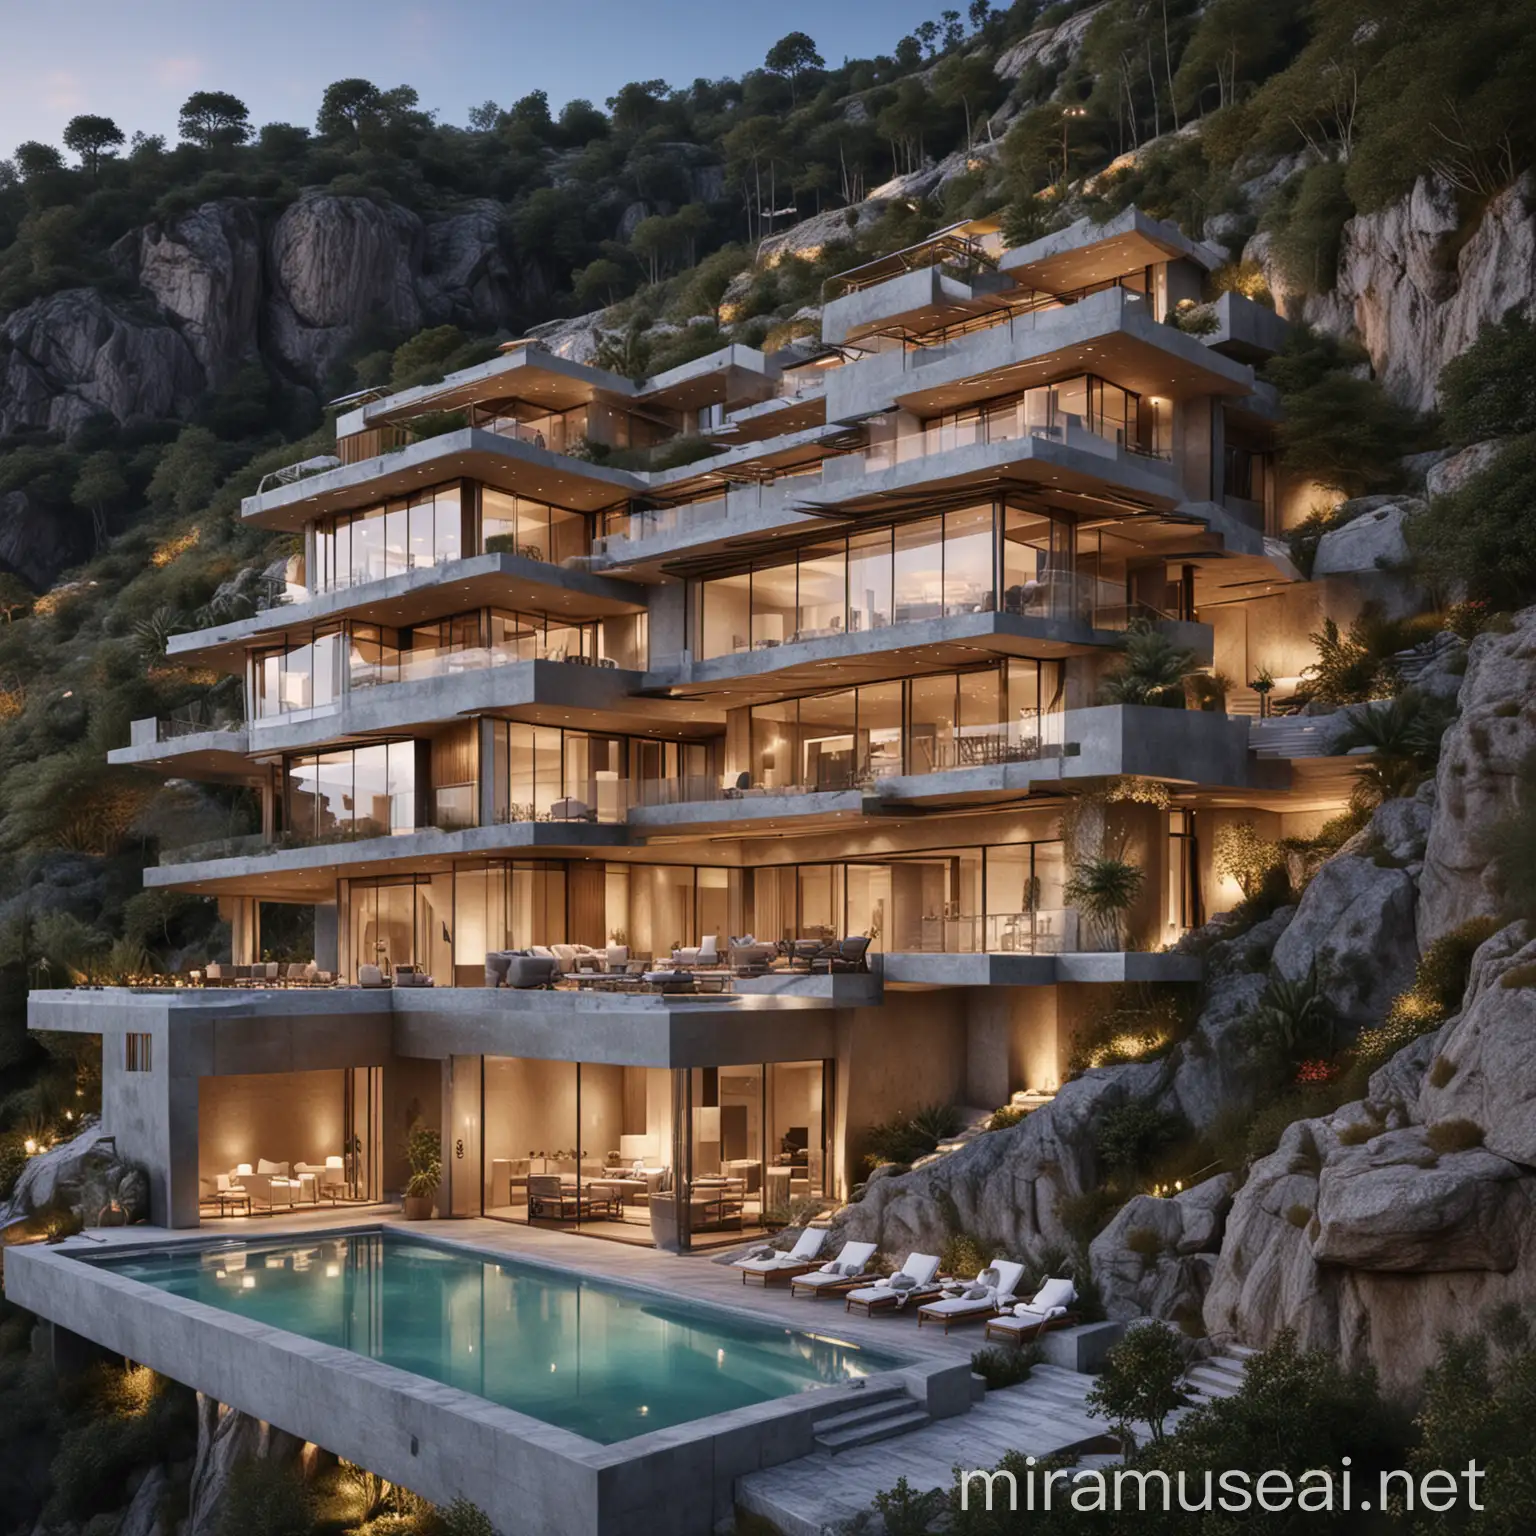 Luxury Mountain Villa Retreat with Seven Stories